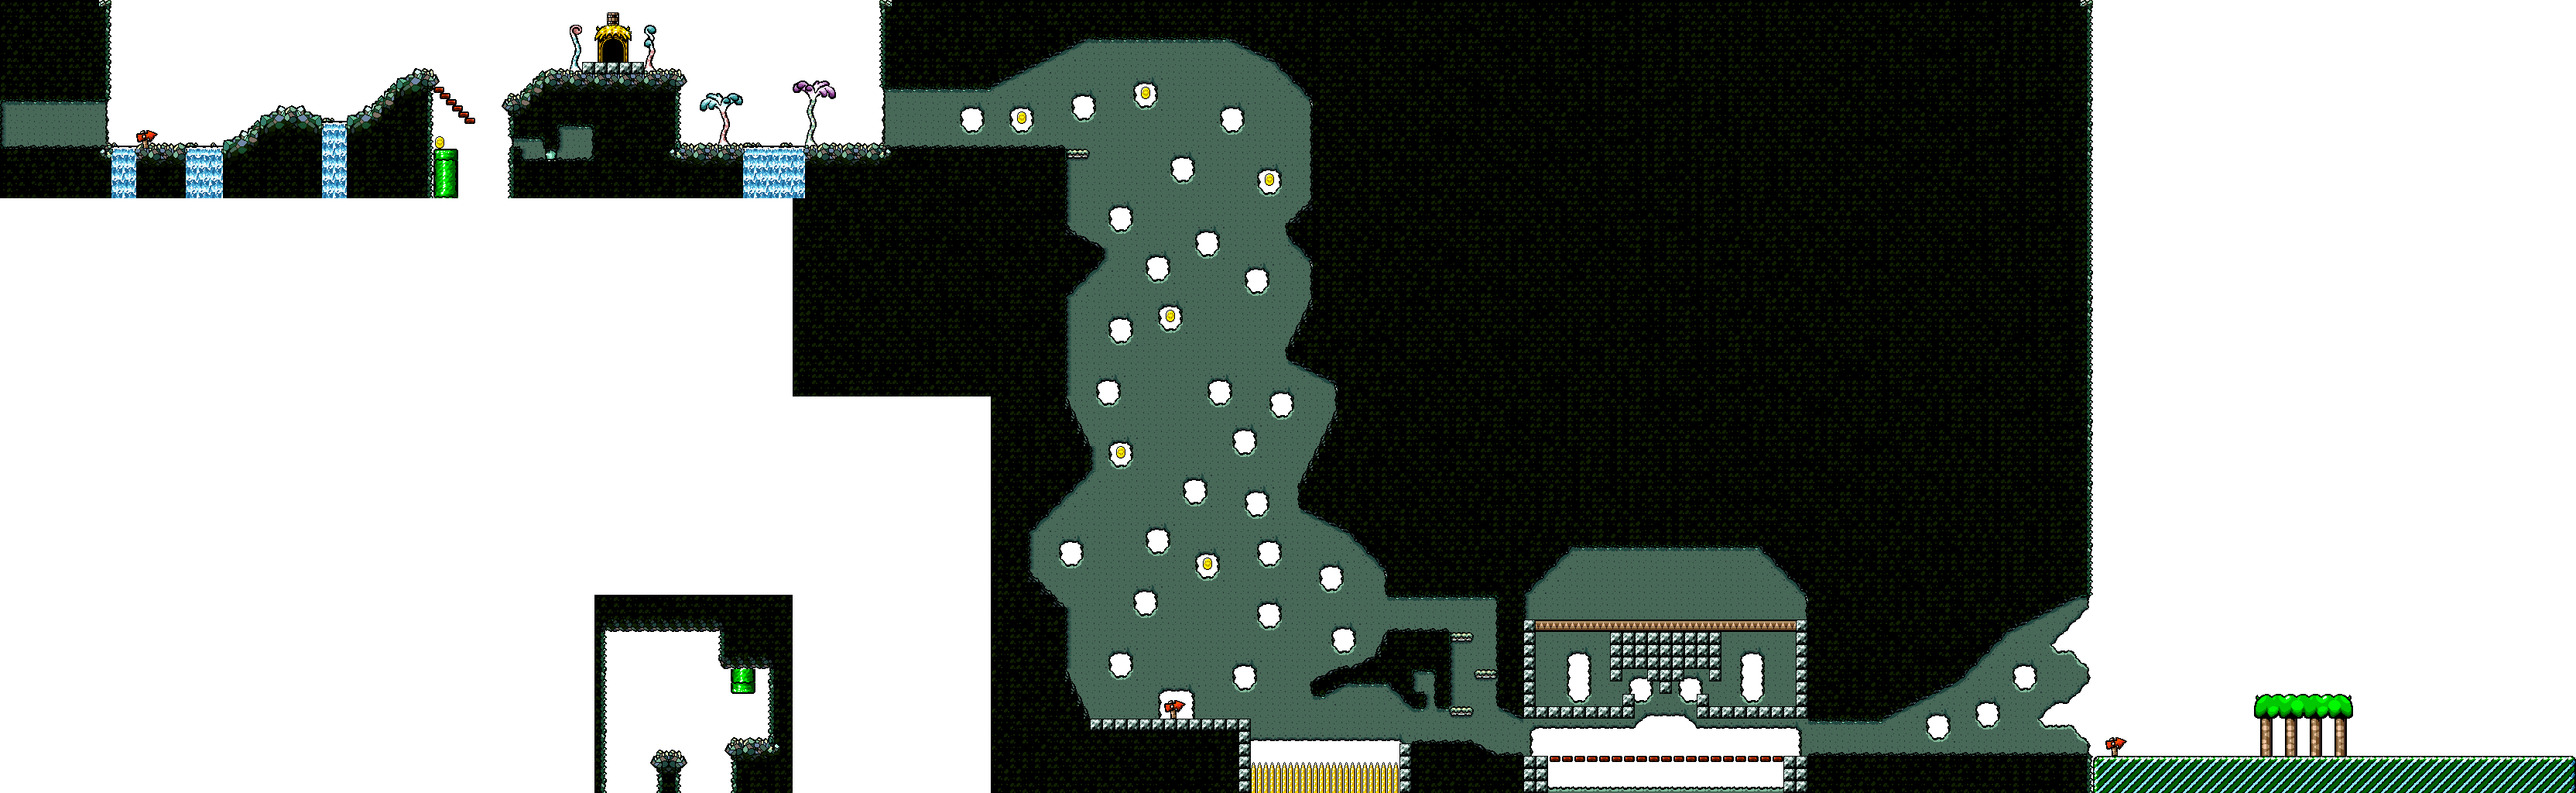 Super Mario World 2: Yoshi's Island - 4-2: The Cave Of The Lakitus (3/3)